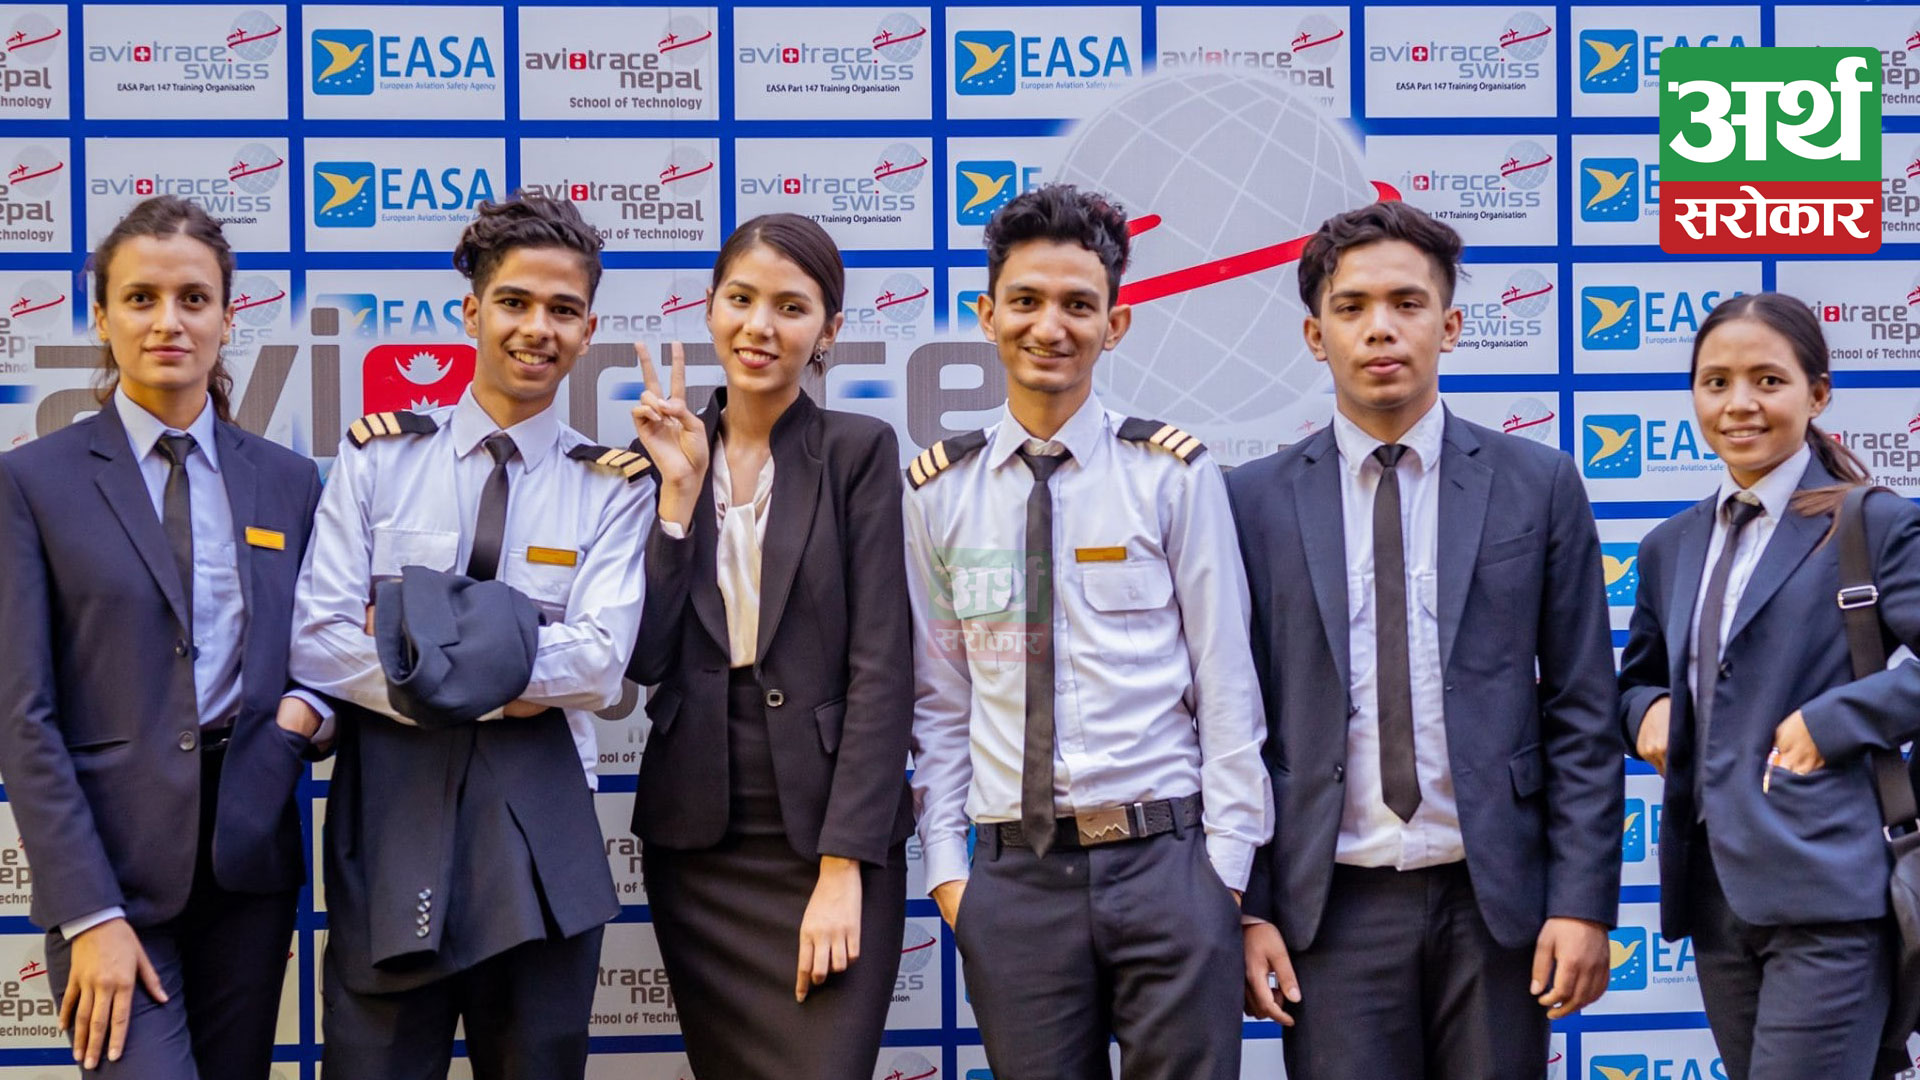 Avoitrace Nepal School of Technology announces scholarships for airhostess training